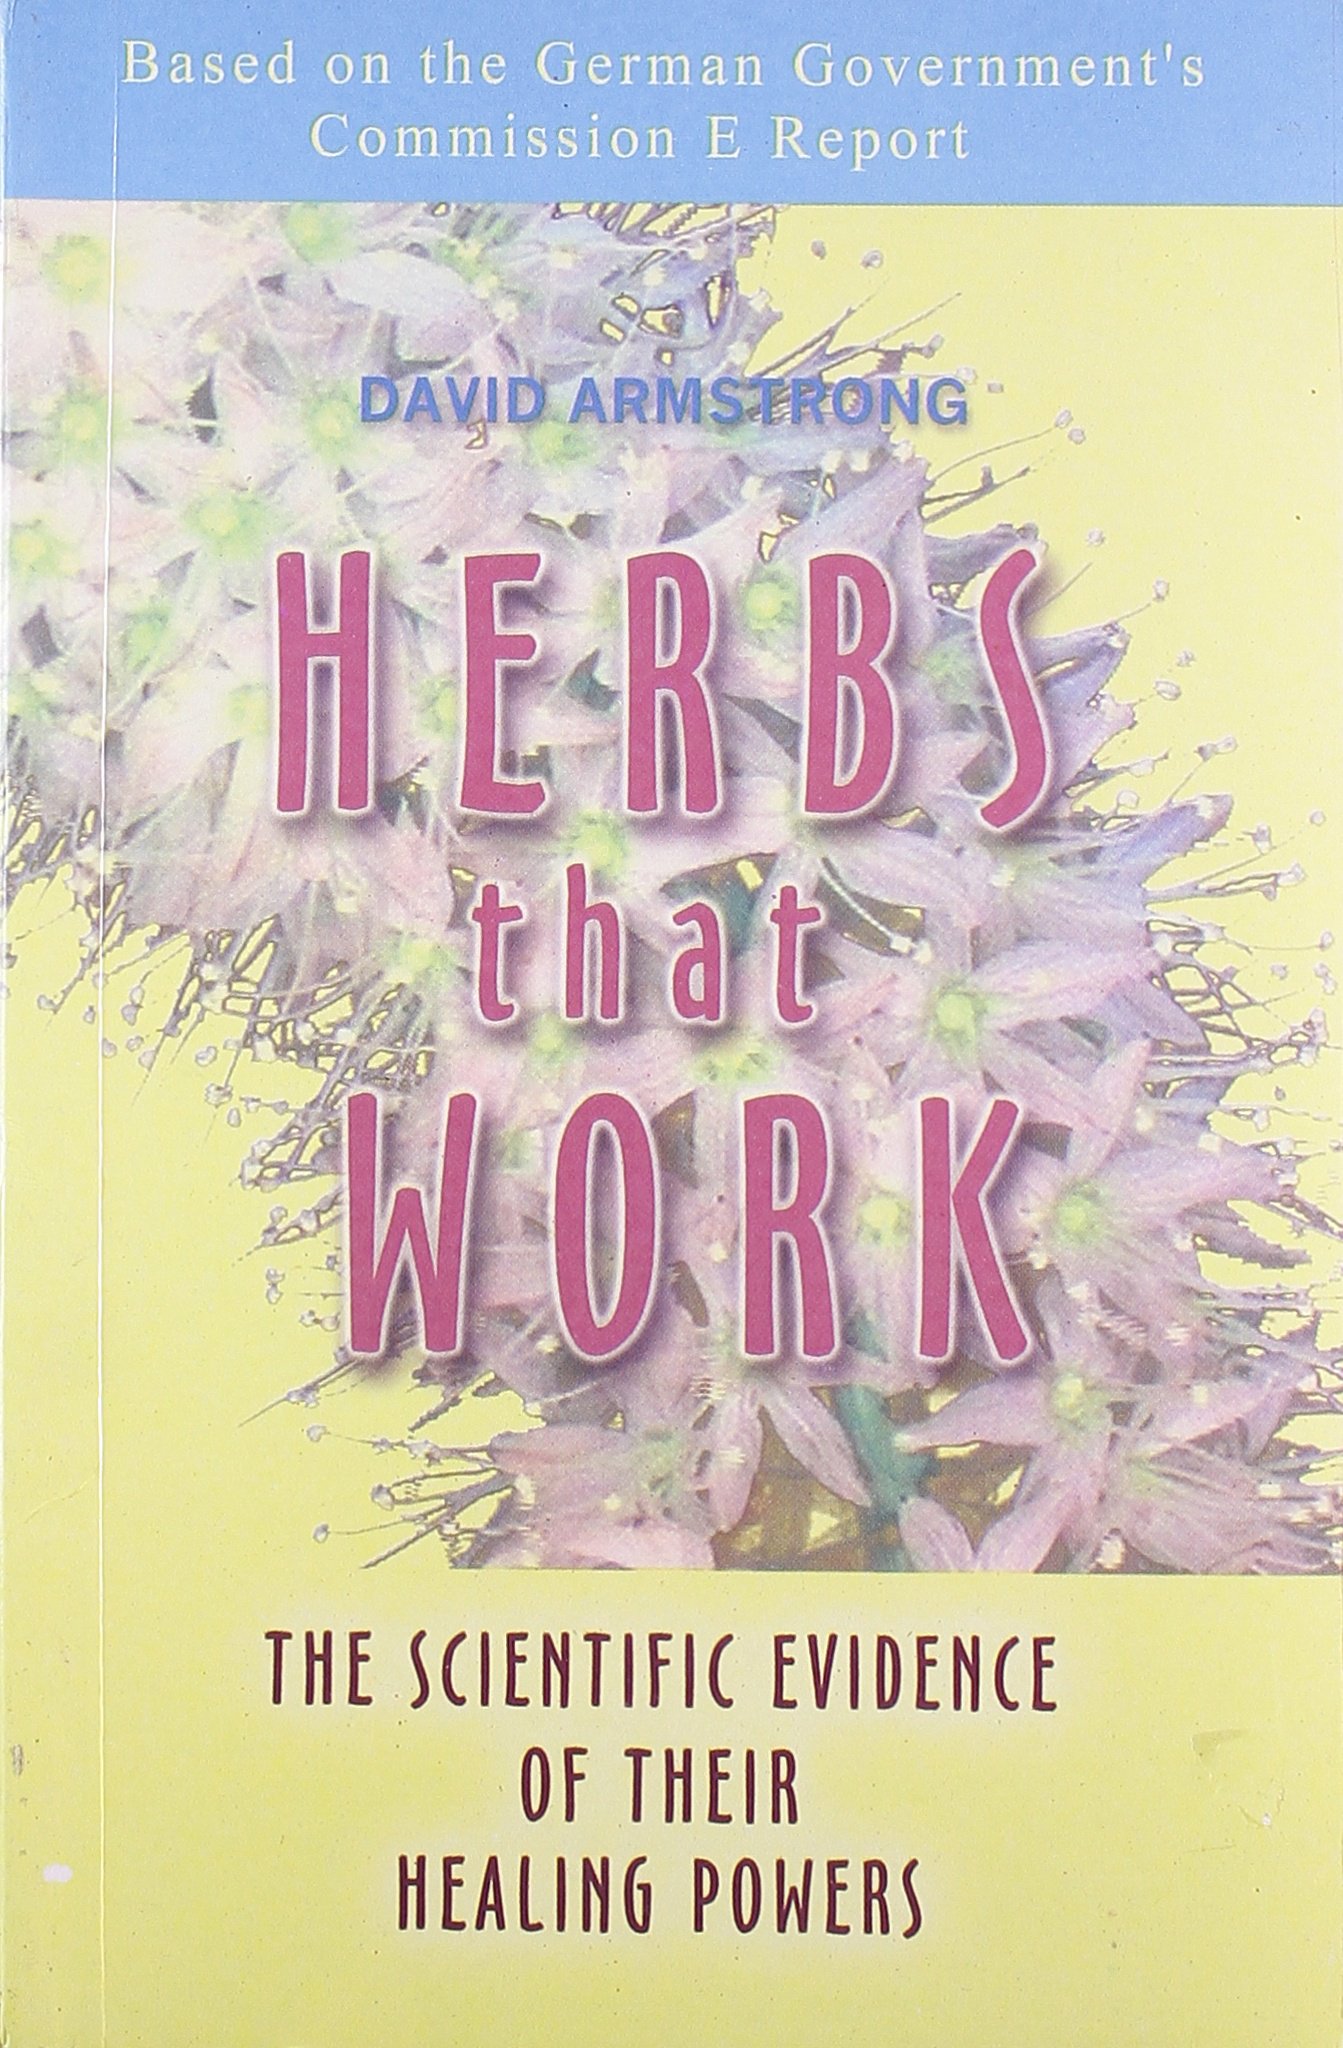 Herbs that Work: 1